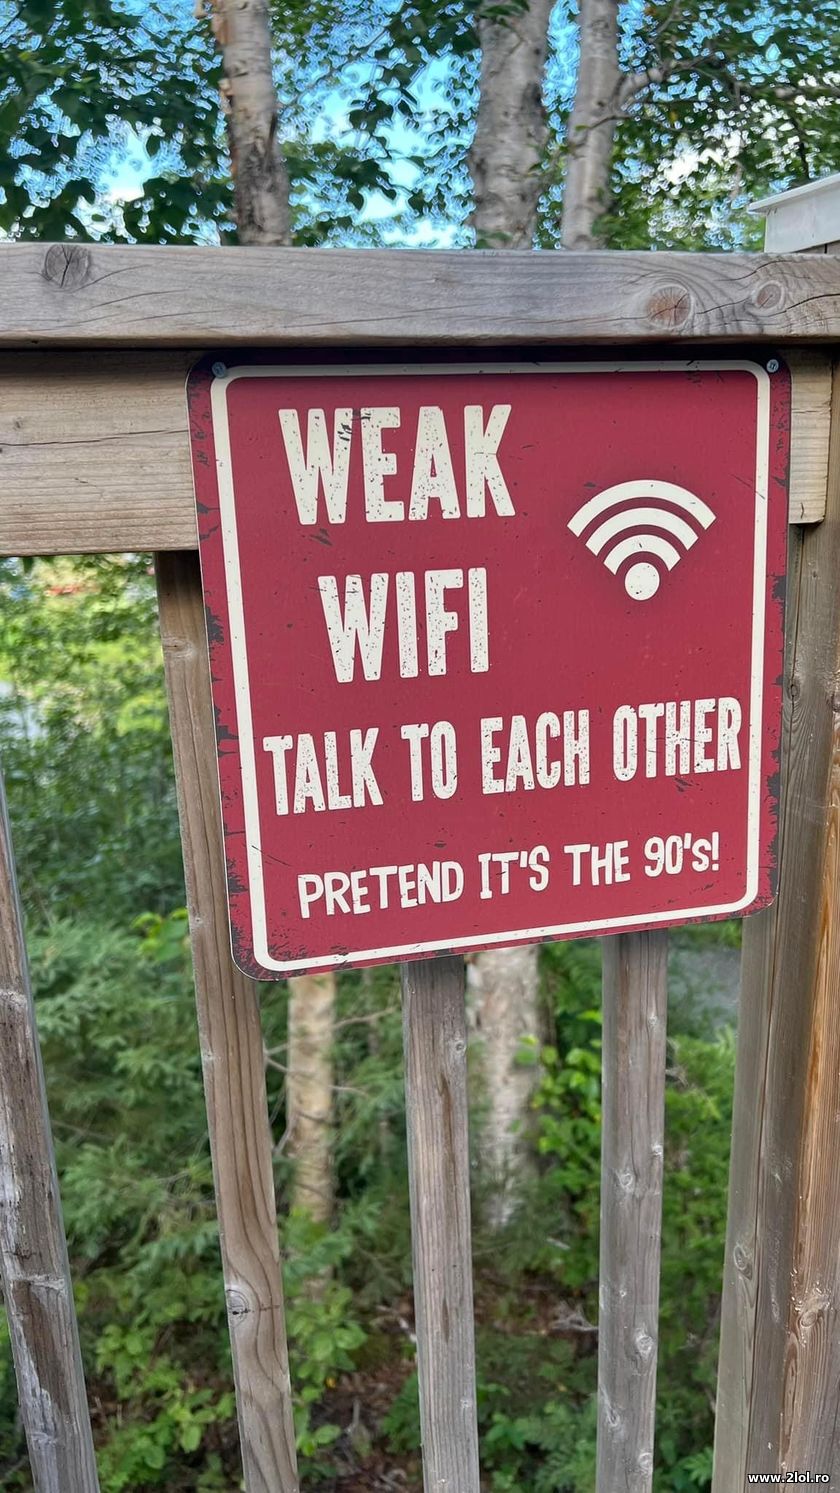 Weak wifi. Talk to each other | poze haioase